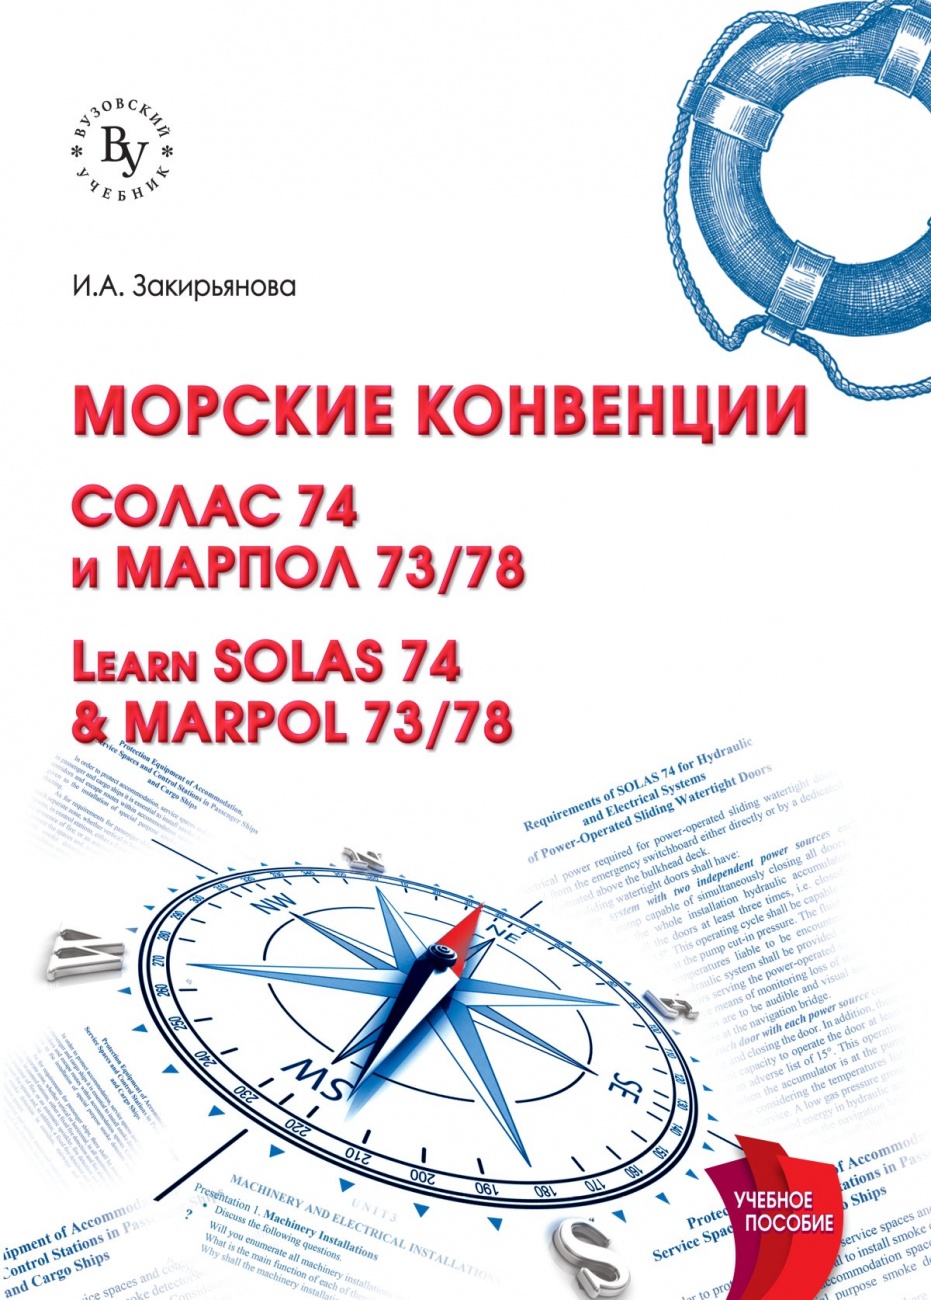 Морские конвенции (Learn SOLAS 74 & MARPOL 73/78)